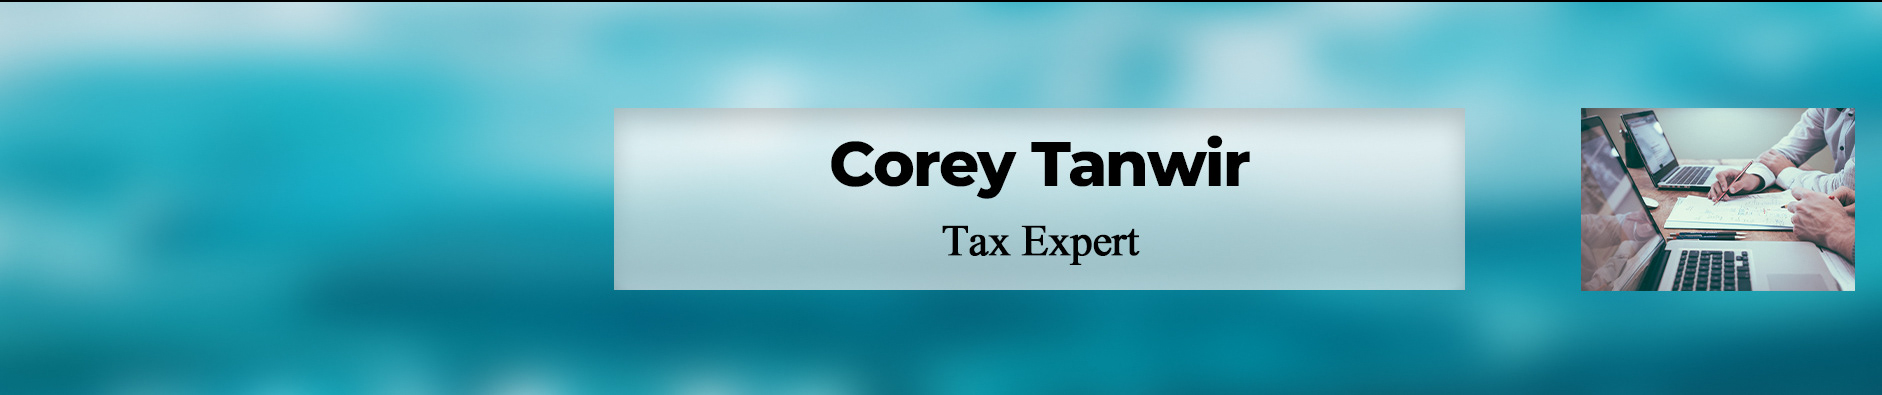 Corey Tanwir's profile banner